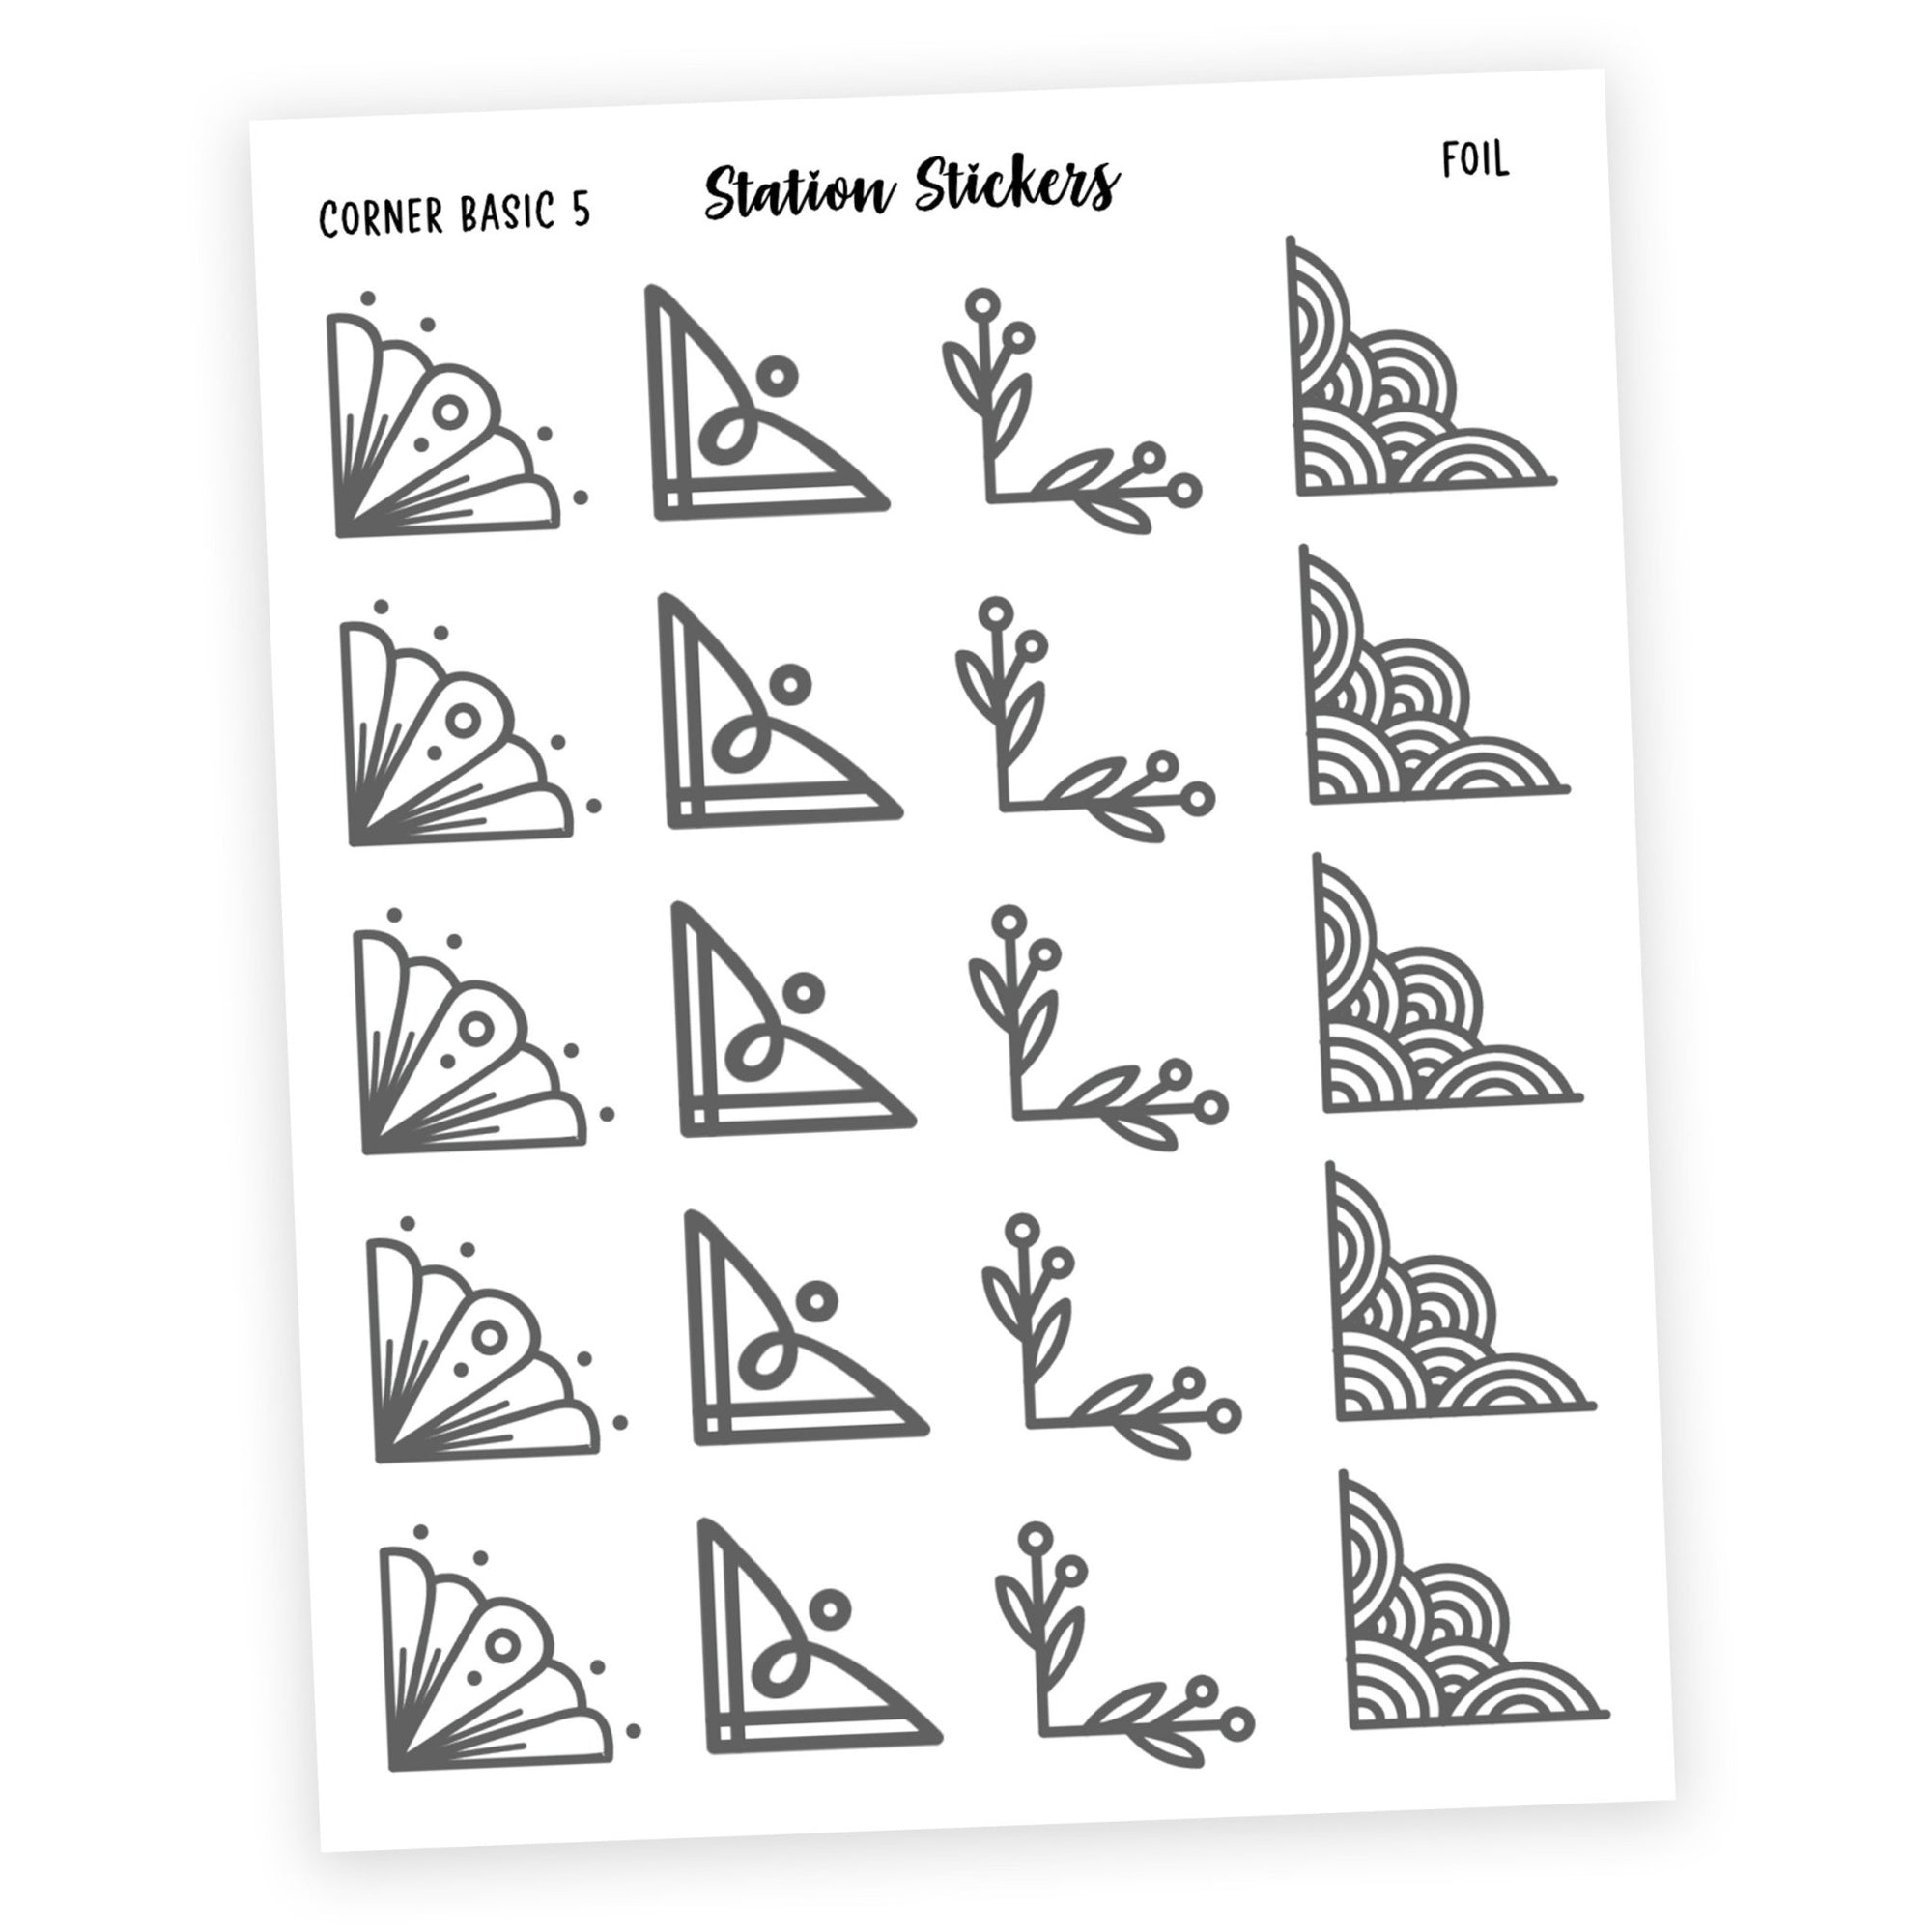 CORNERS • BASIC 5 - Station Stickers